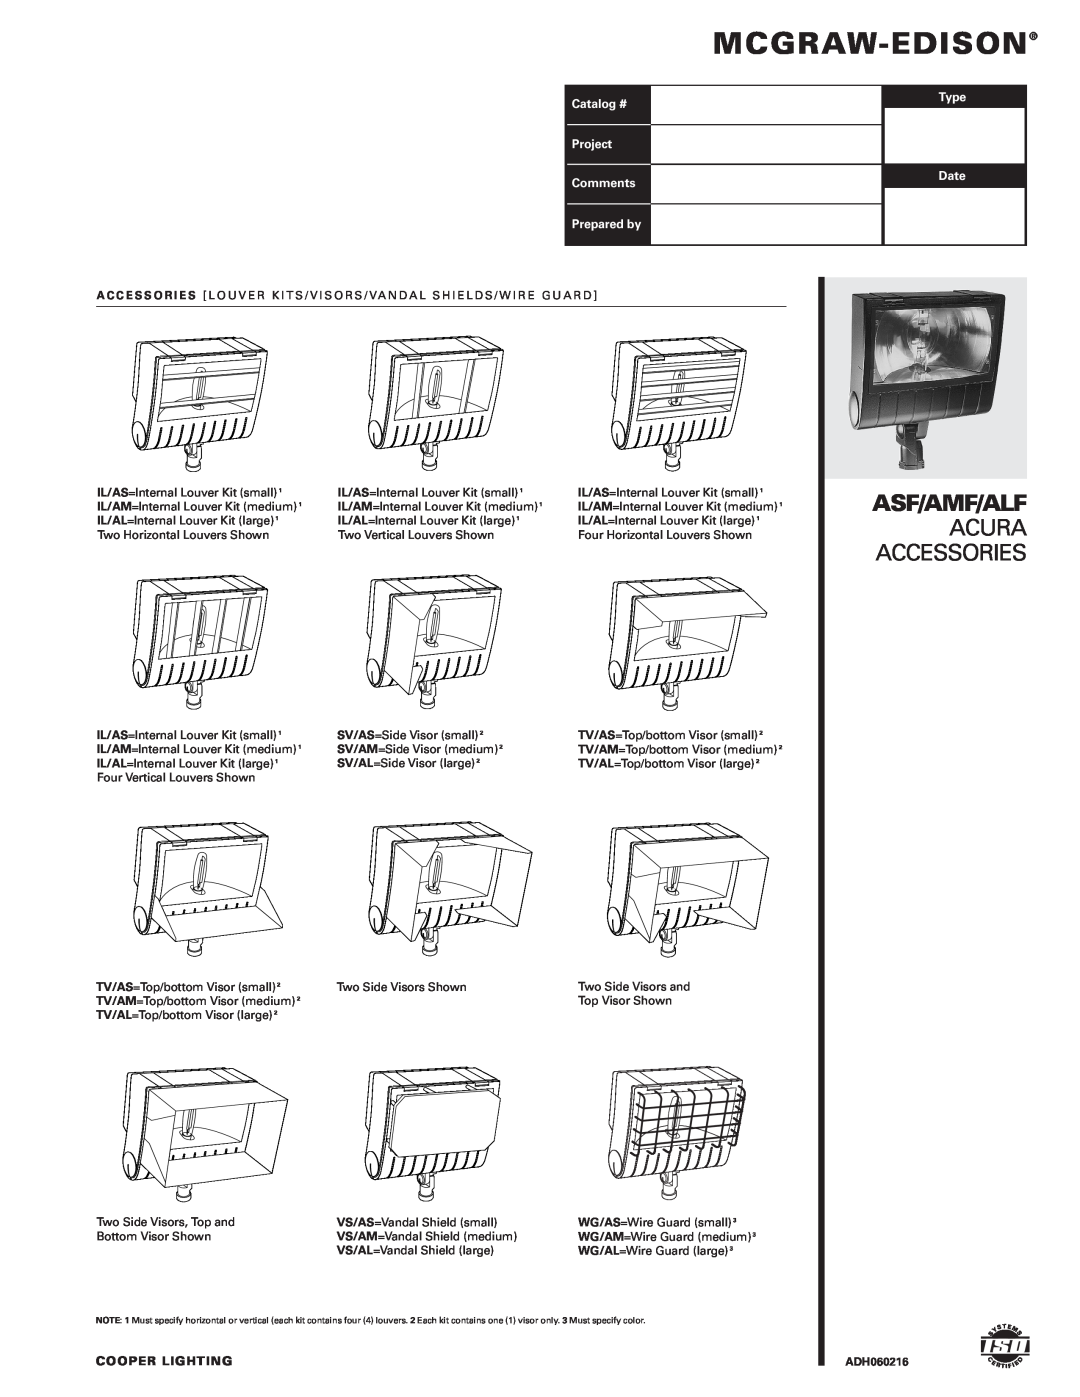 Cooper Lighting ALF, AMF manual Cooper Lighting, ADH060216, Mcgraw-Edison, Asf/Amf/Alf, Acura Accessories, Catalog #, Type 